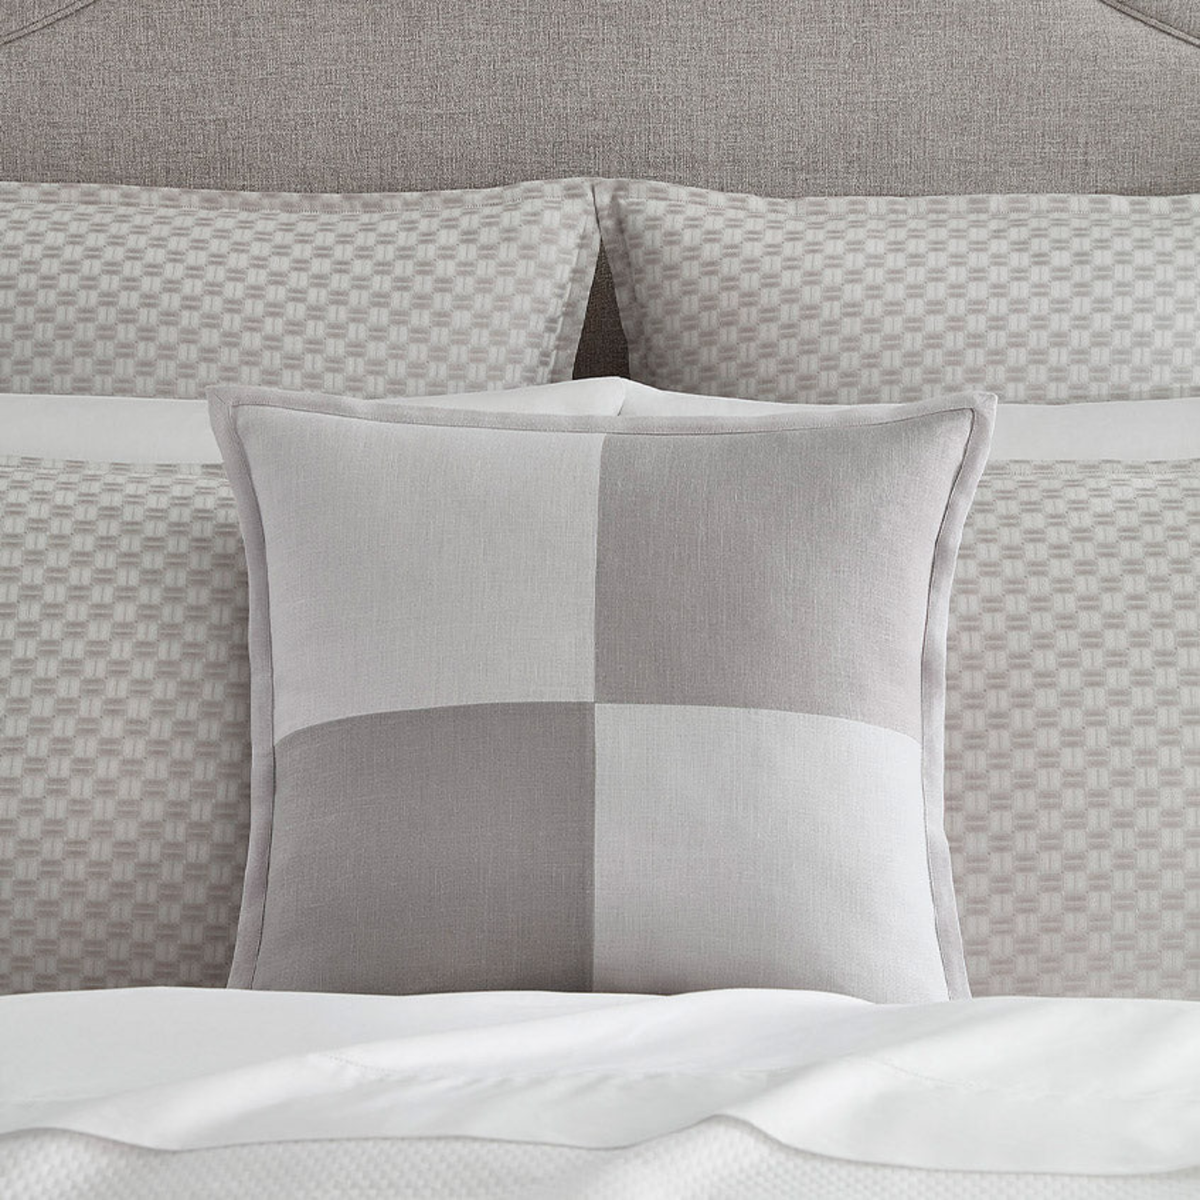 Sferra Scacchi Decorative Pillow in Platinum/Grey Color with Coordinate